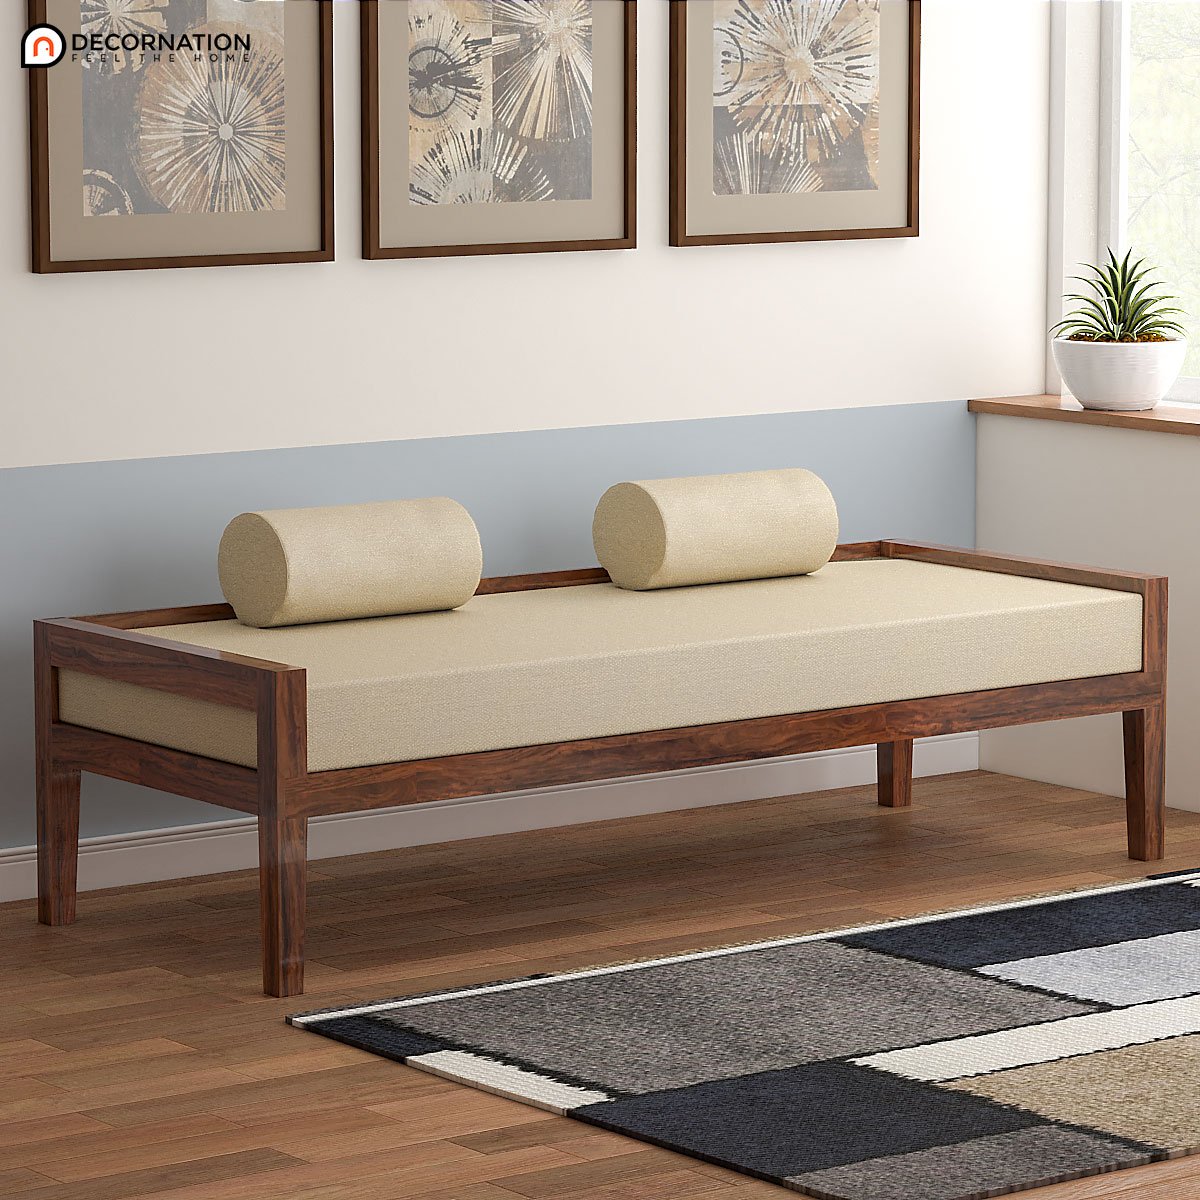 Zagreb Wooden 3 Seater Sofa – Natural Finish (Diwan)